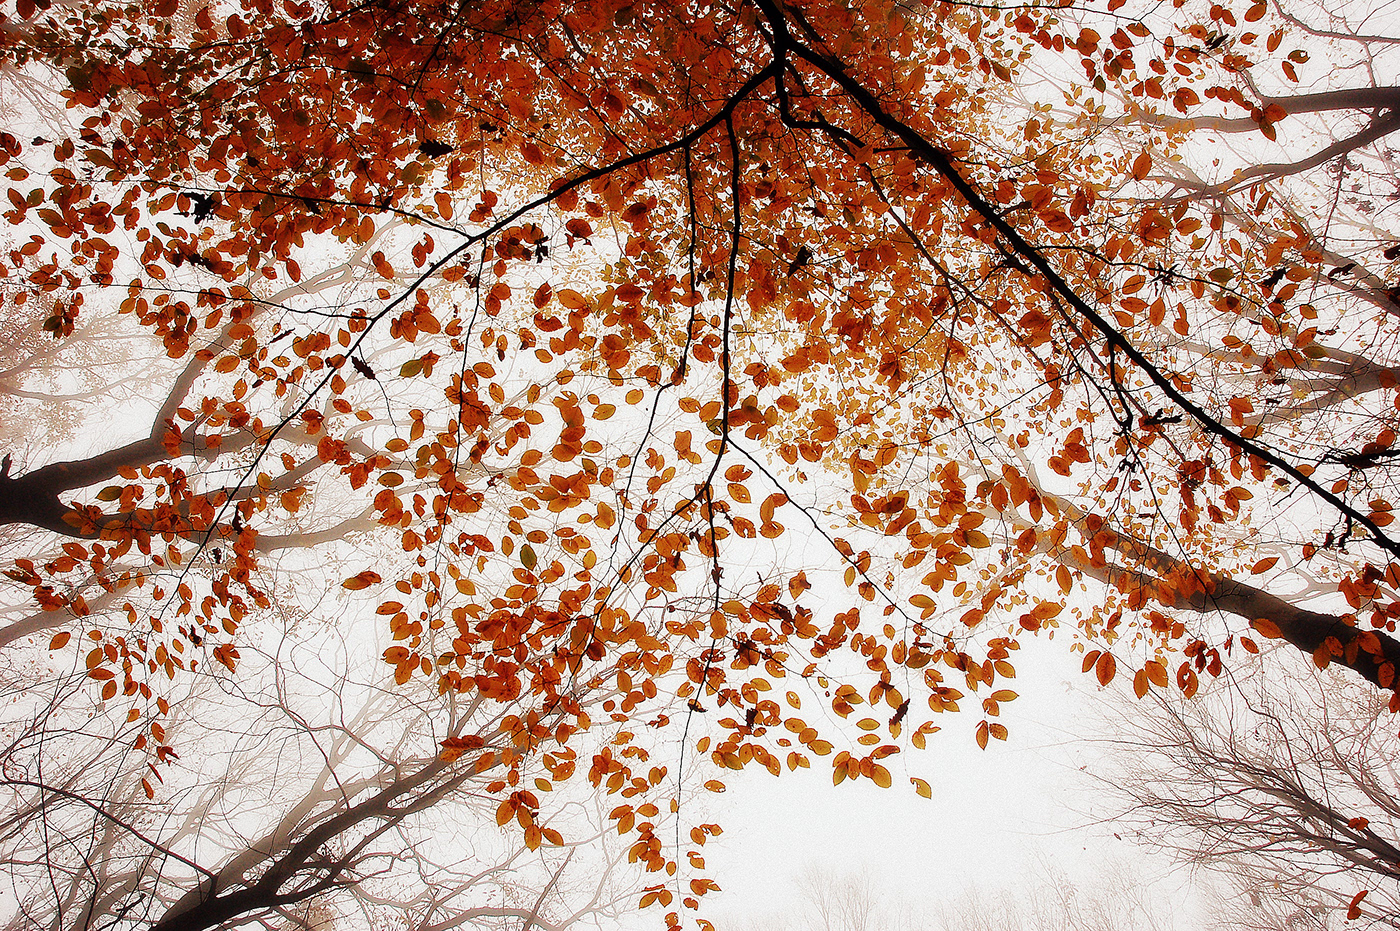 November autumn forest trees colors Carpathians foggy